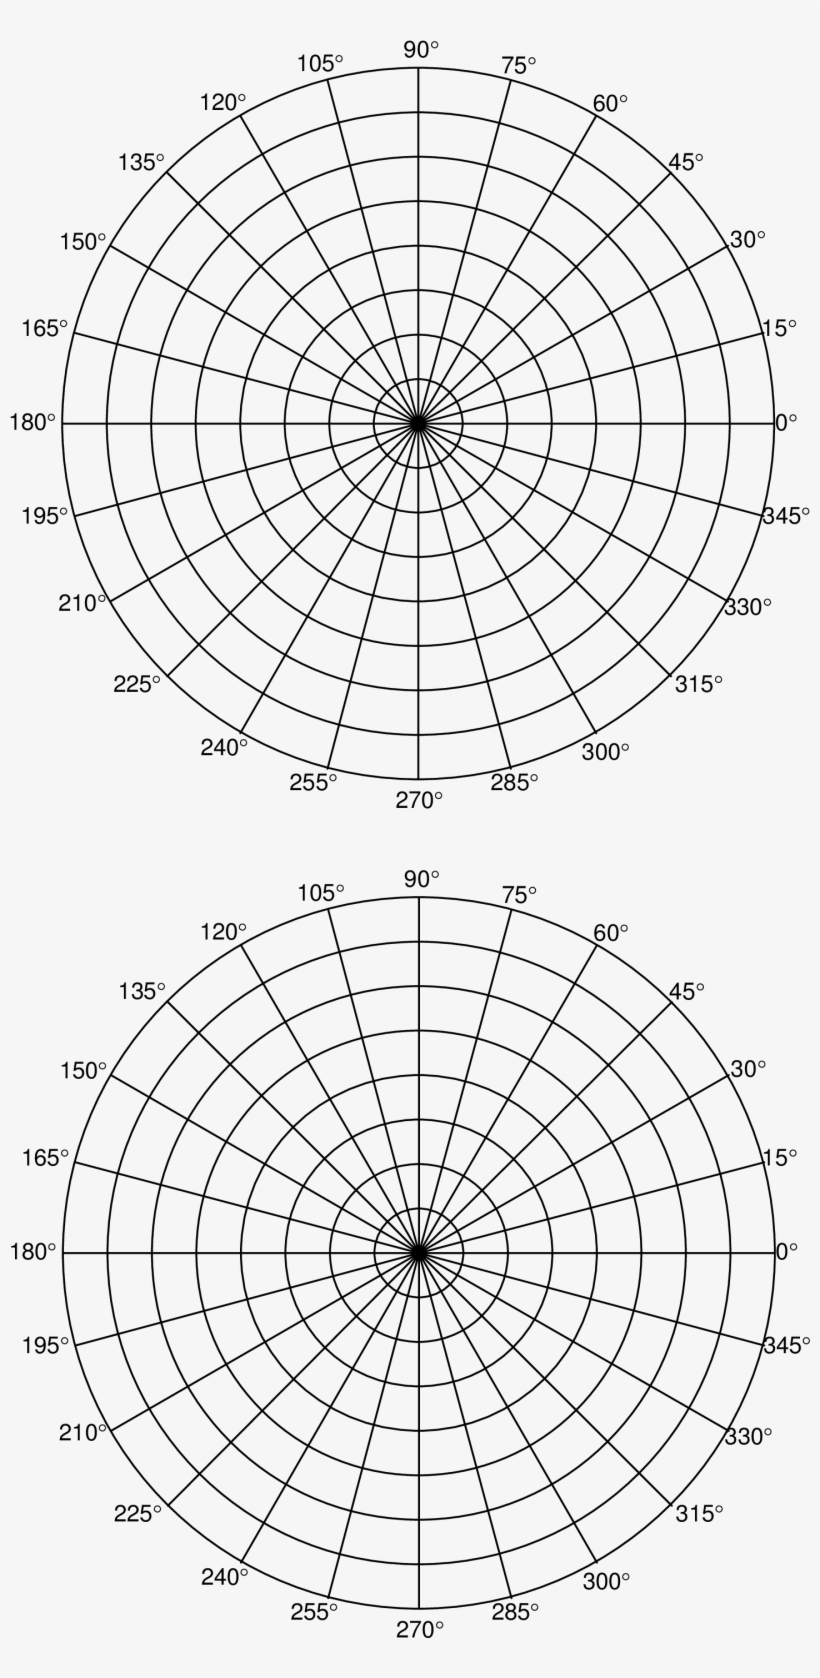 Polar Coordinate Graph Paper Main Image - Polar Coordinate Plane Radians, transparent png #911887